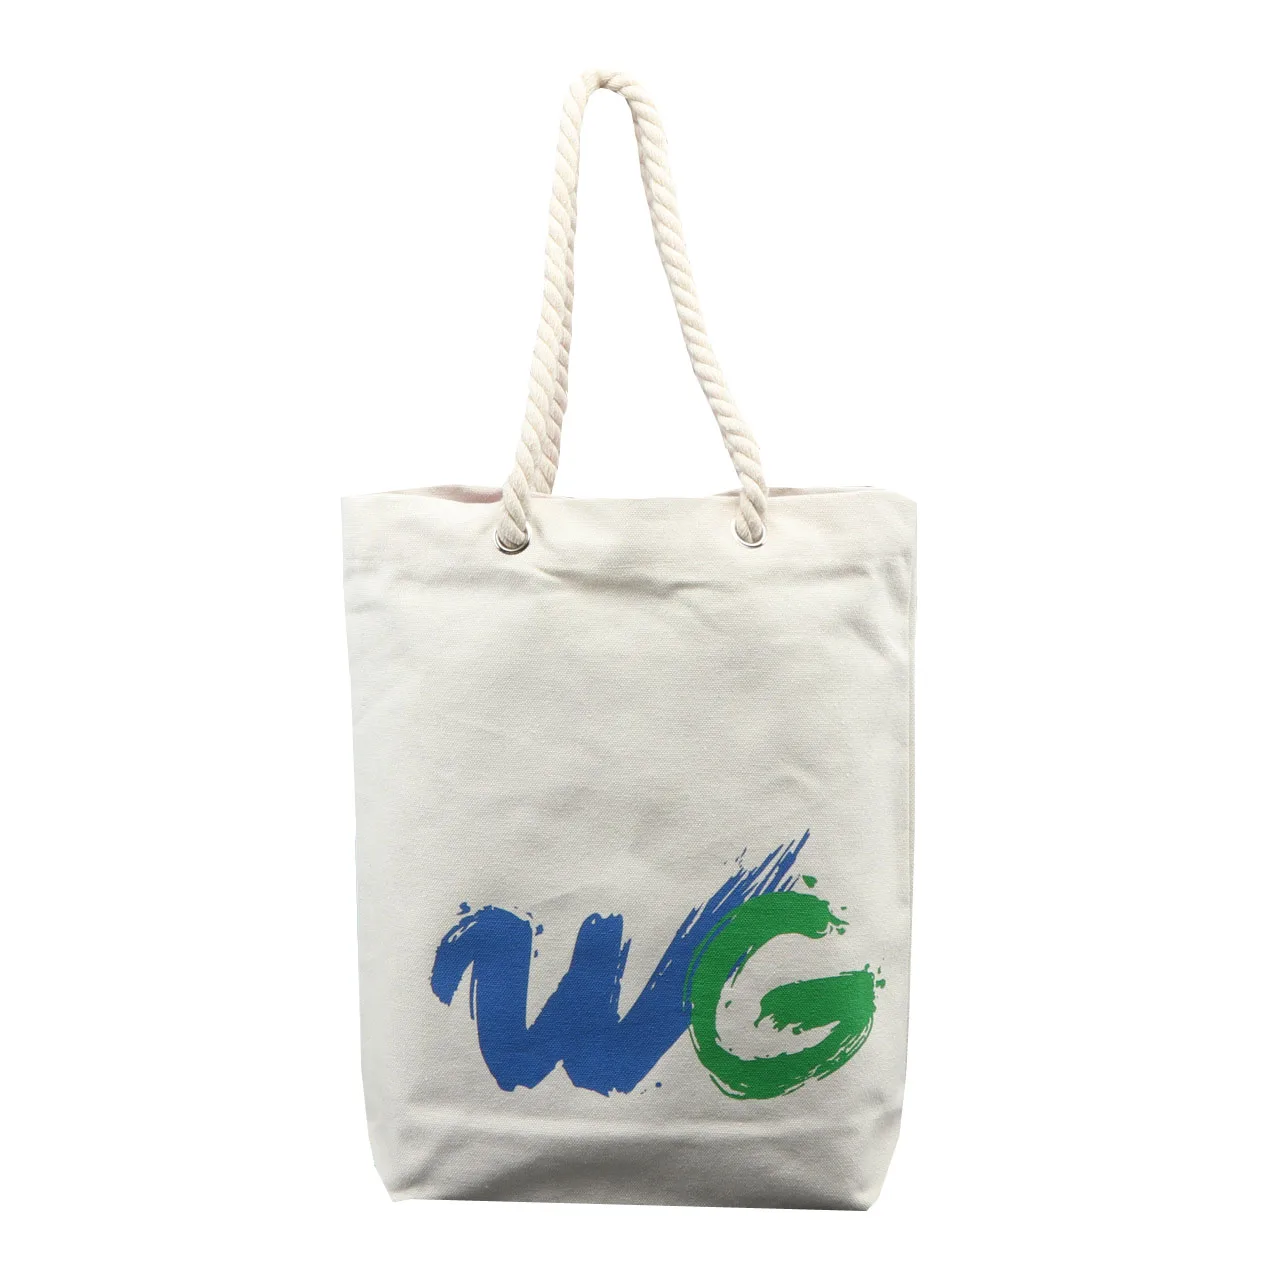 Hot sale reusable plain white canvas shopping bag with custom logo printed durable natural 8oz 10oz cotton hand tote